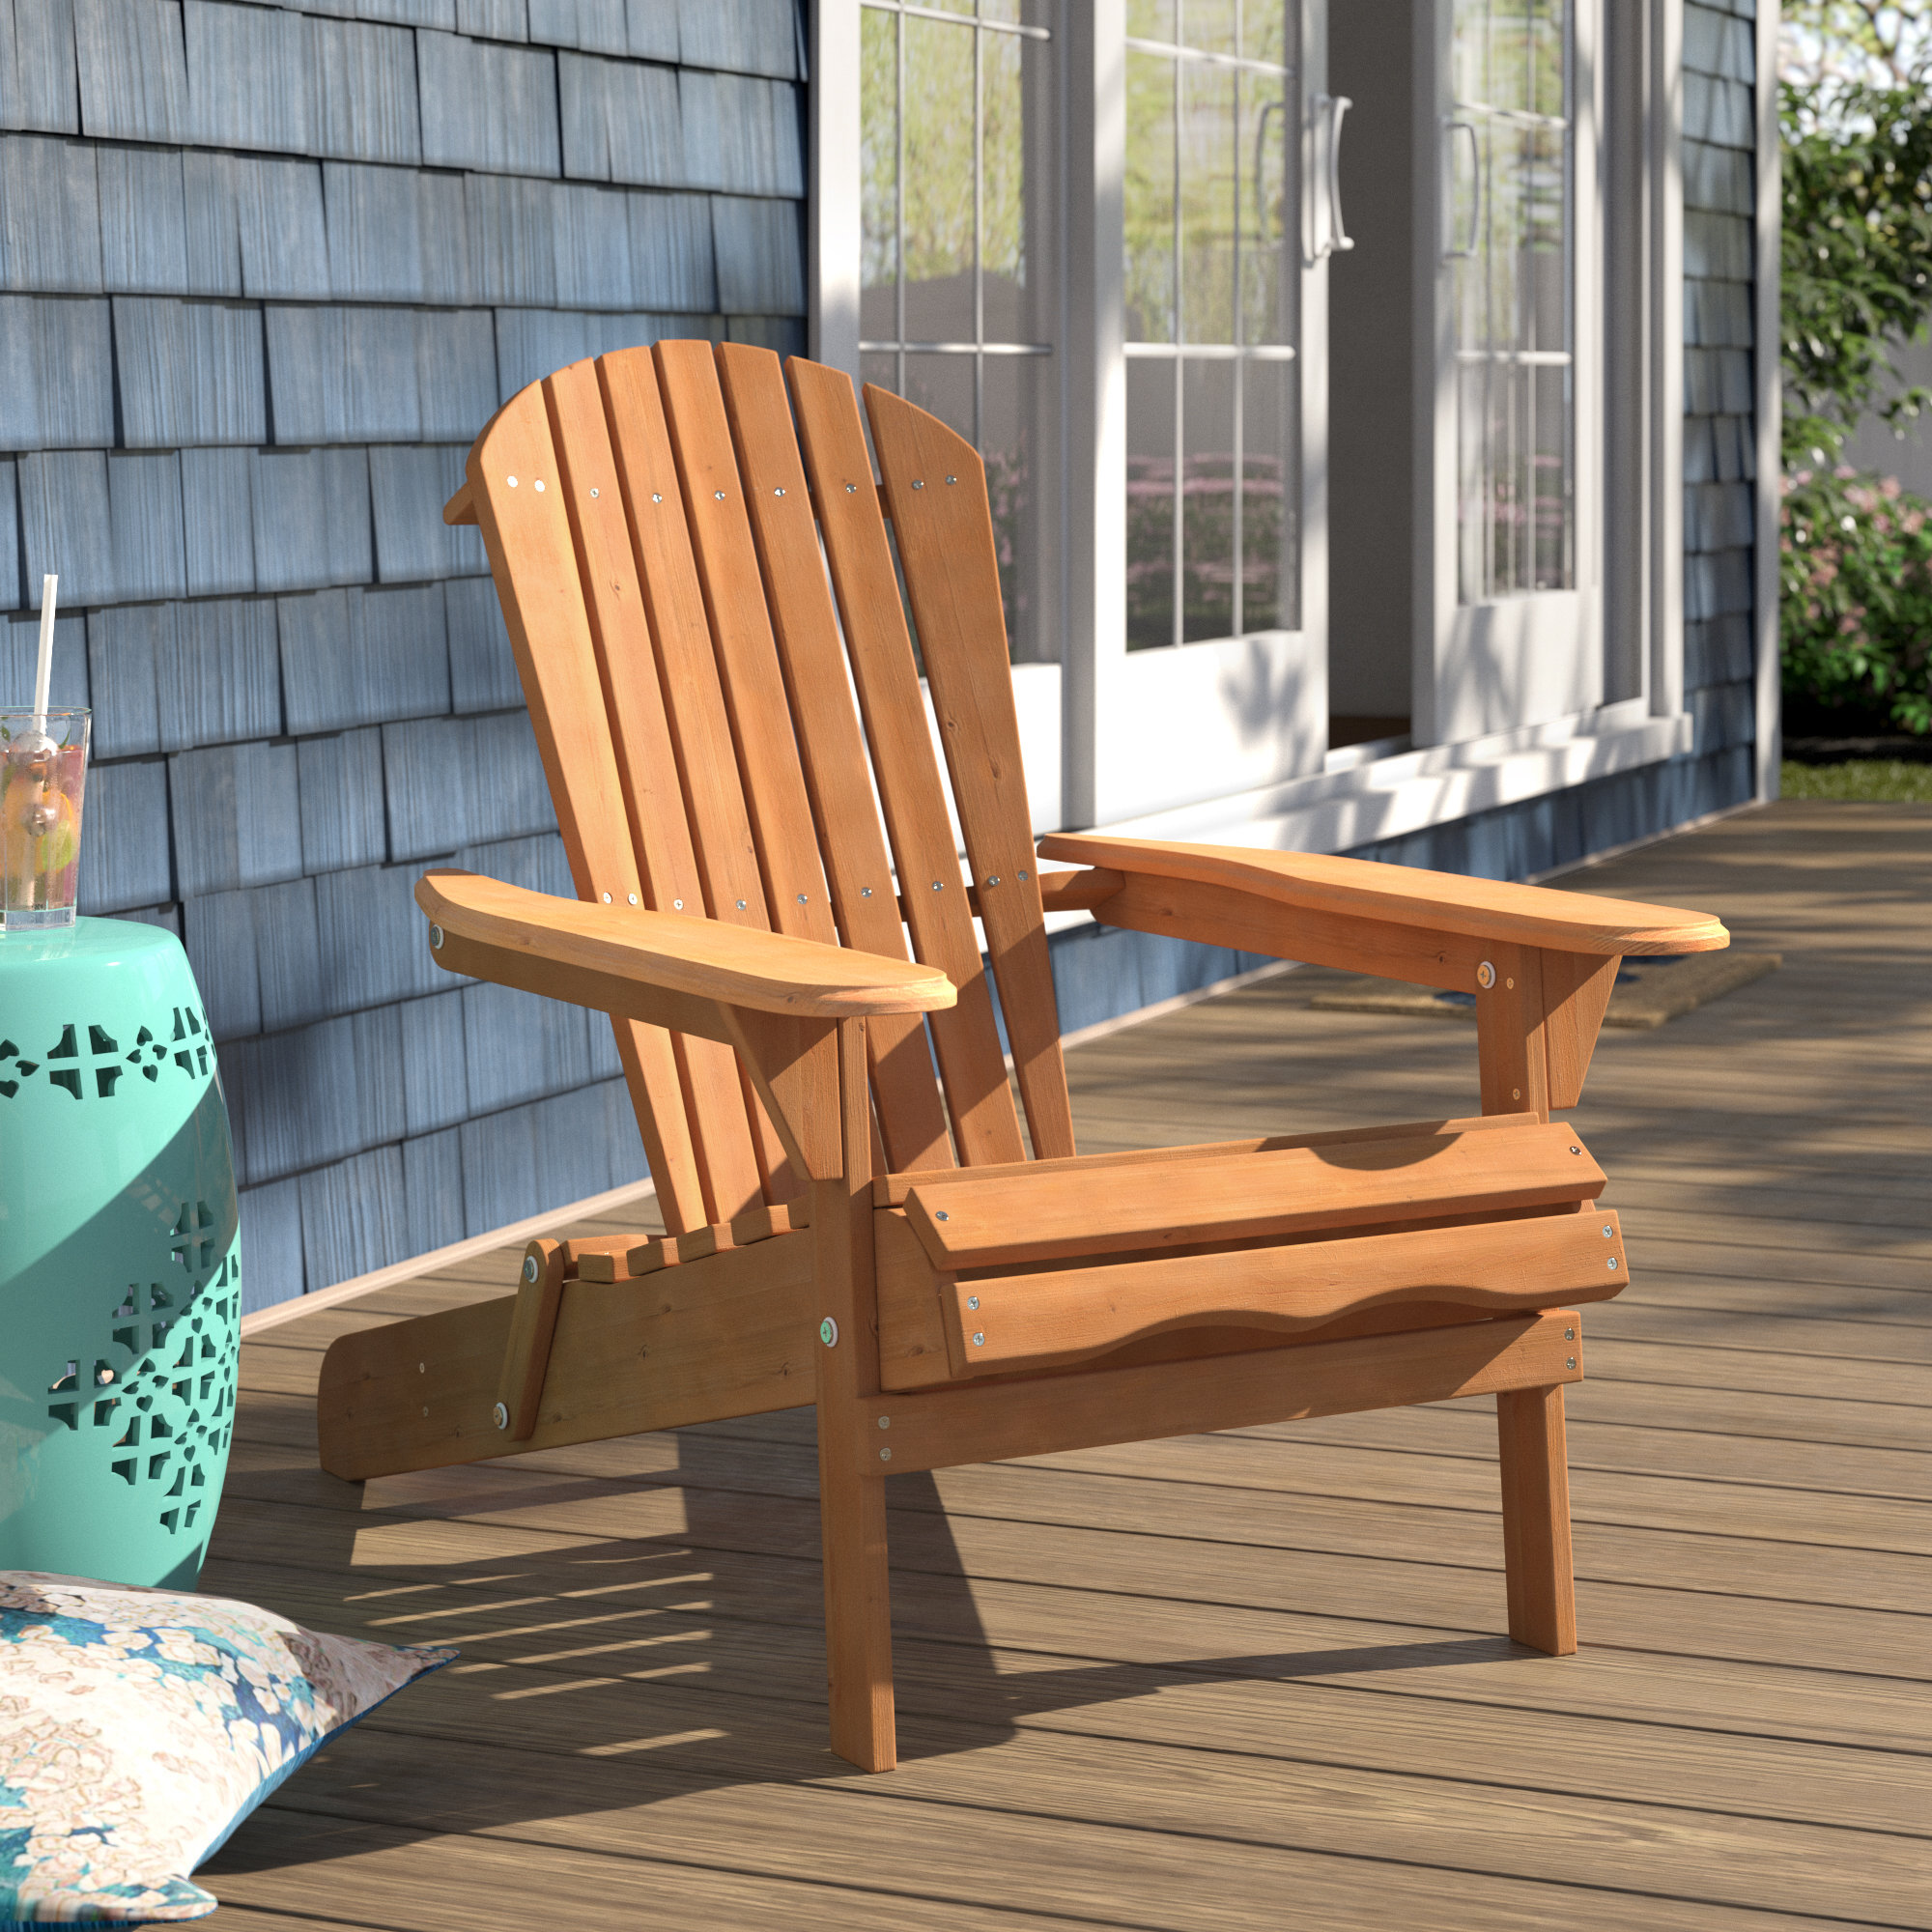 Outdoor Foldable Fir Wood Adirondack Chair Patio Deck Home Garden Furniture US 